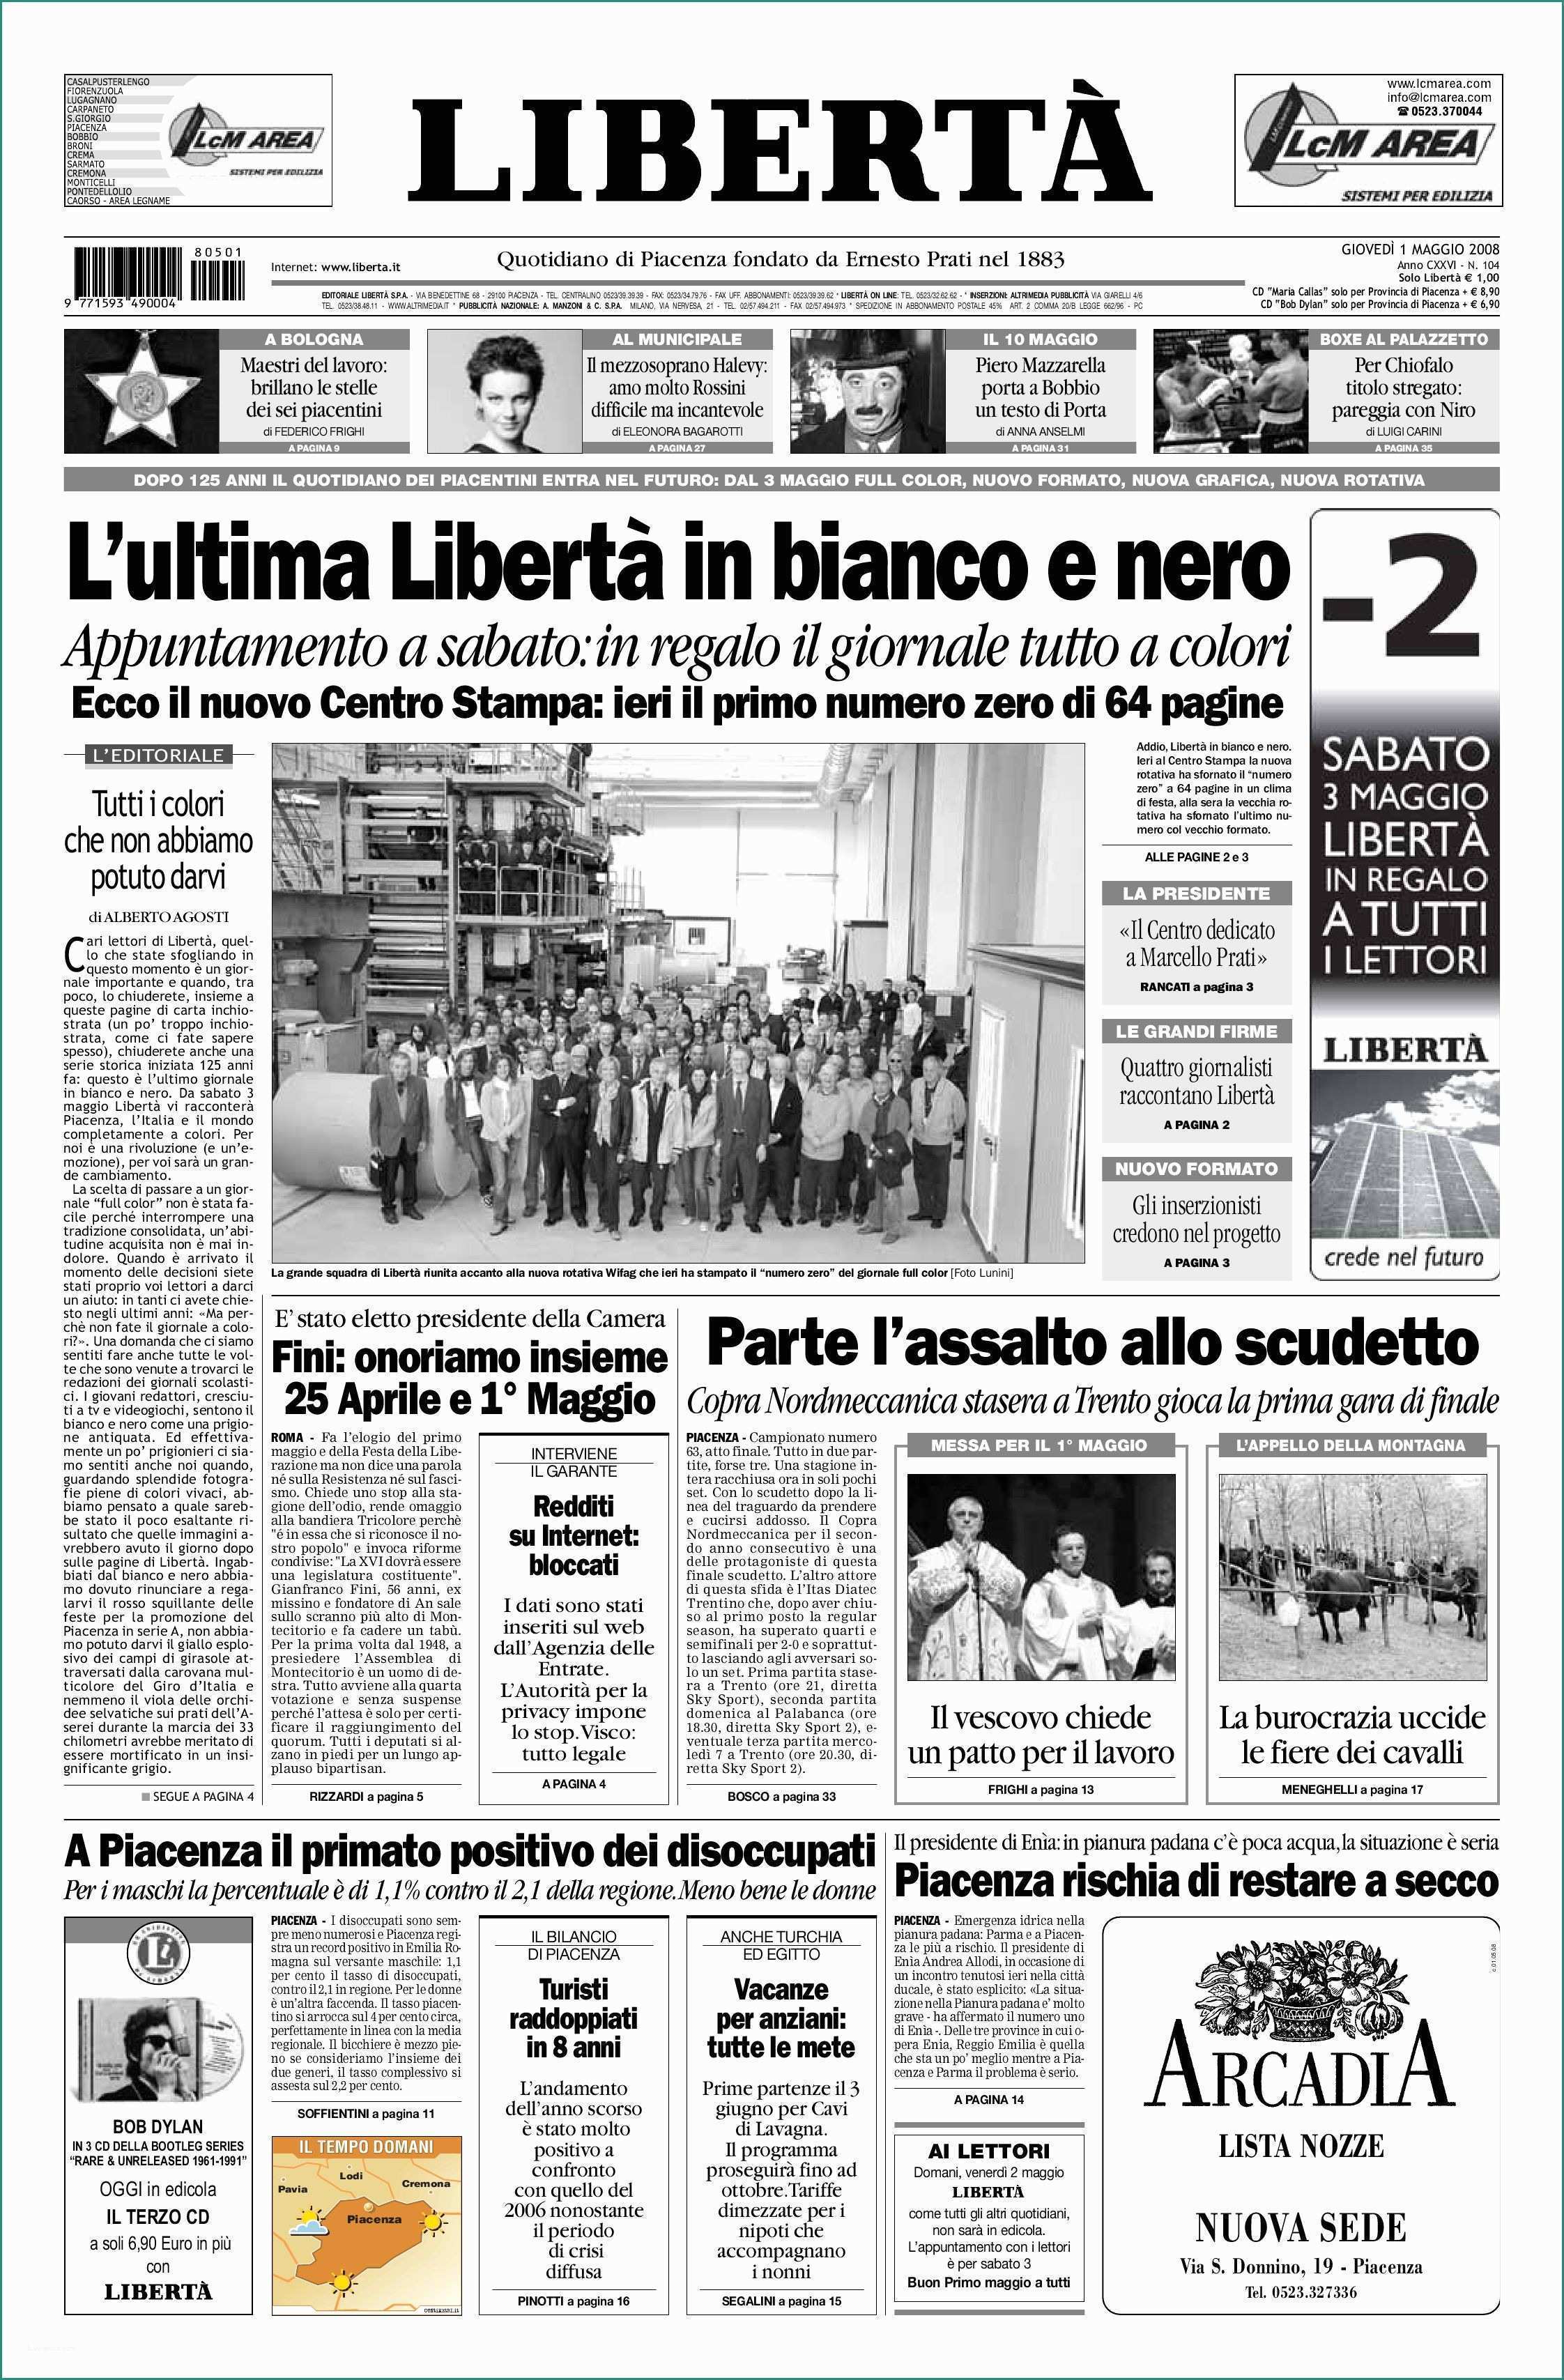 Orari Ipercoop Sesto Fiorentino E Liberta by Liberta issuu